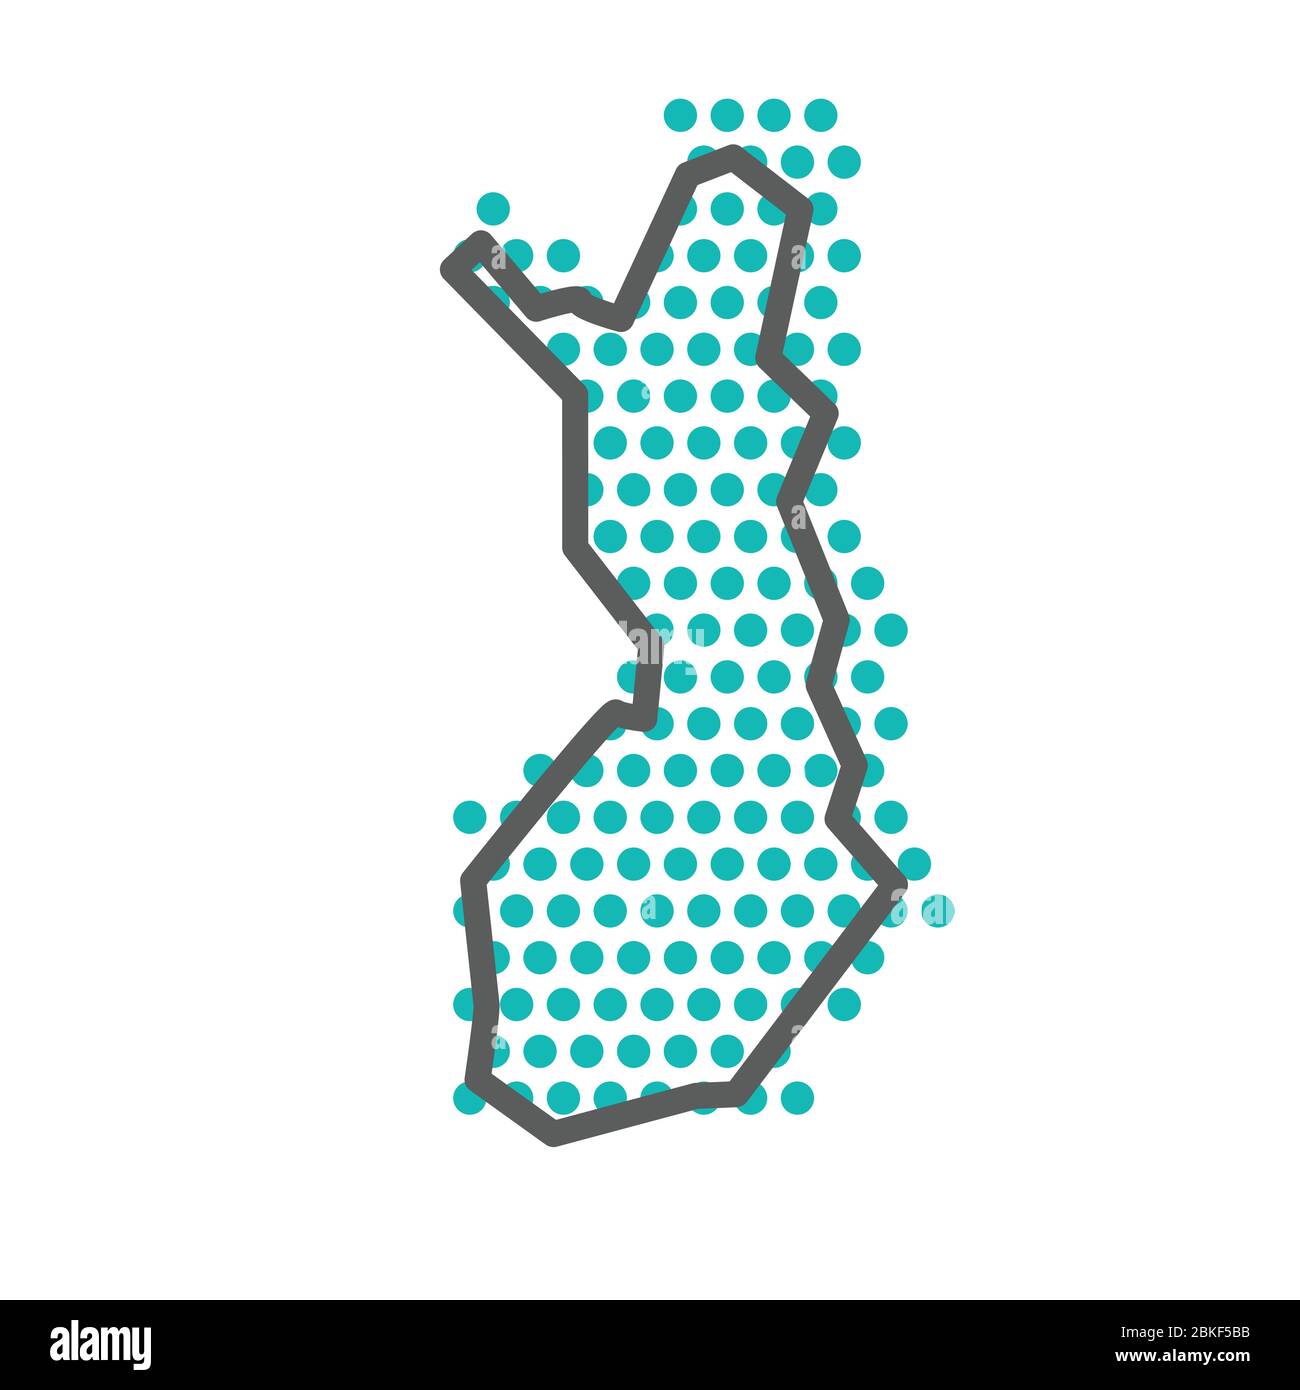 Finnland Einfache Übersichtskarte mit grünem Rasterpunktmuster Stock Vektor